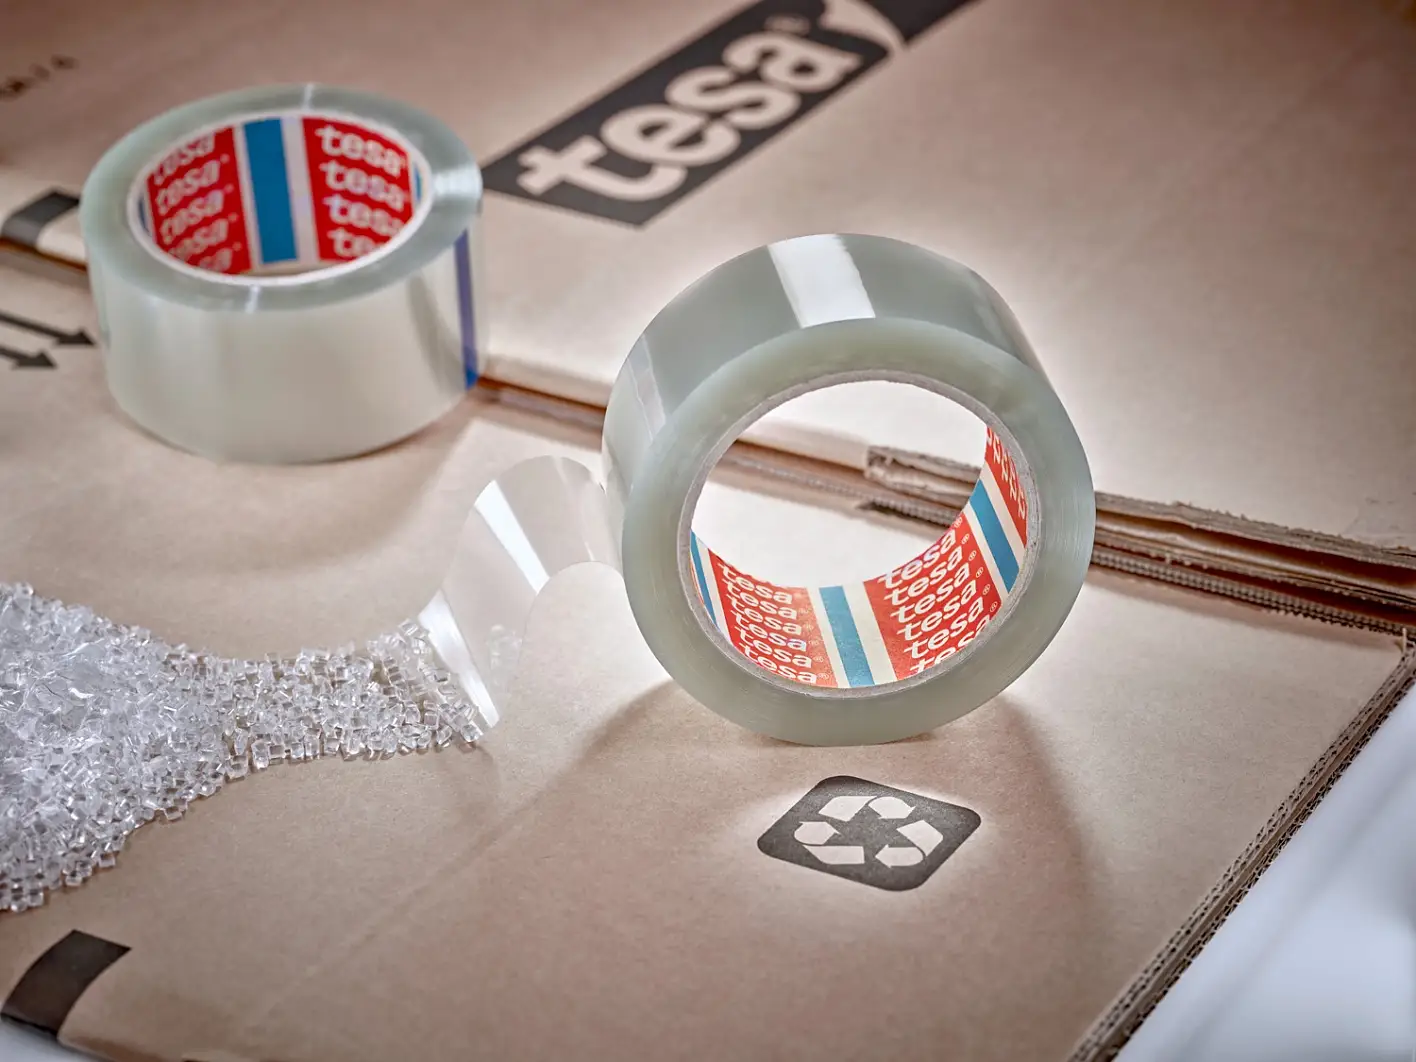 tesa-60412-recycled-pet-packaging-tape-mood-3-72dpi